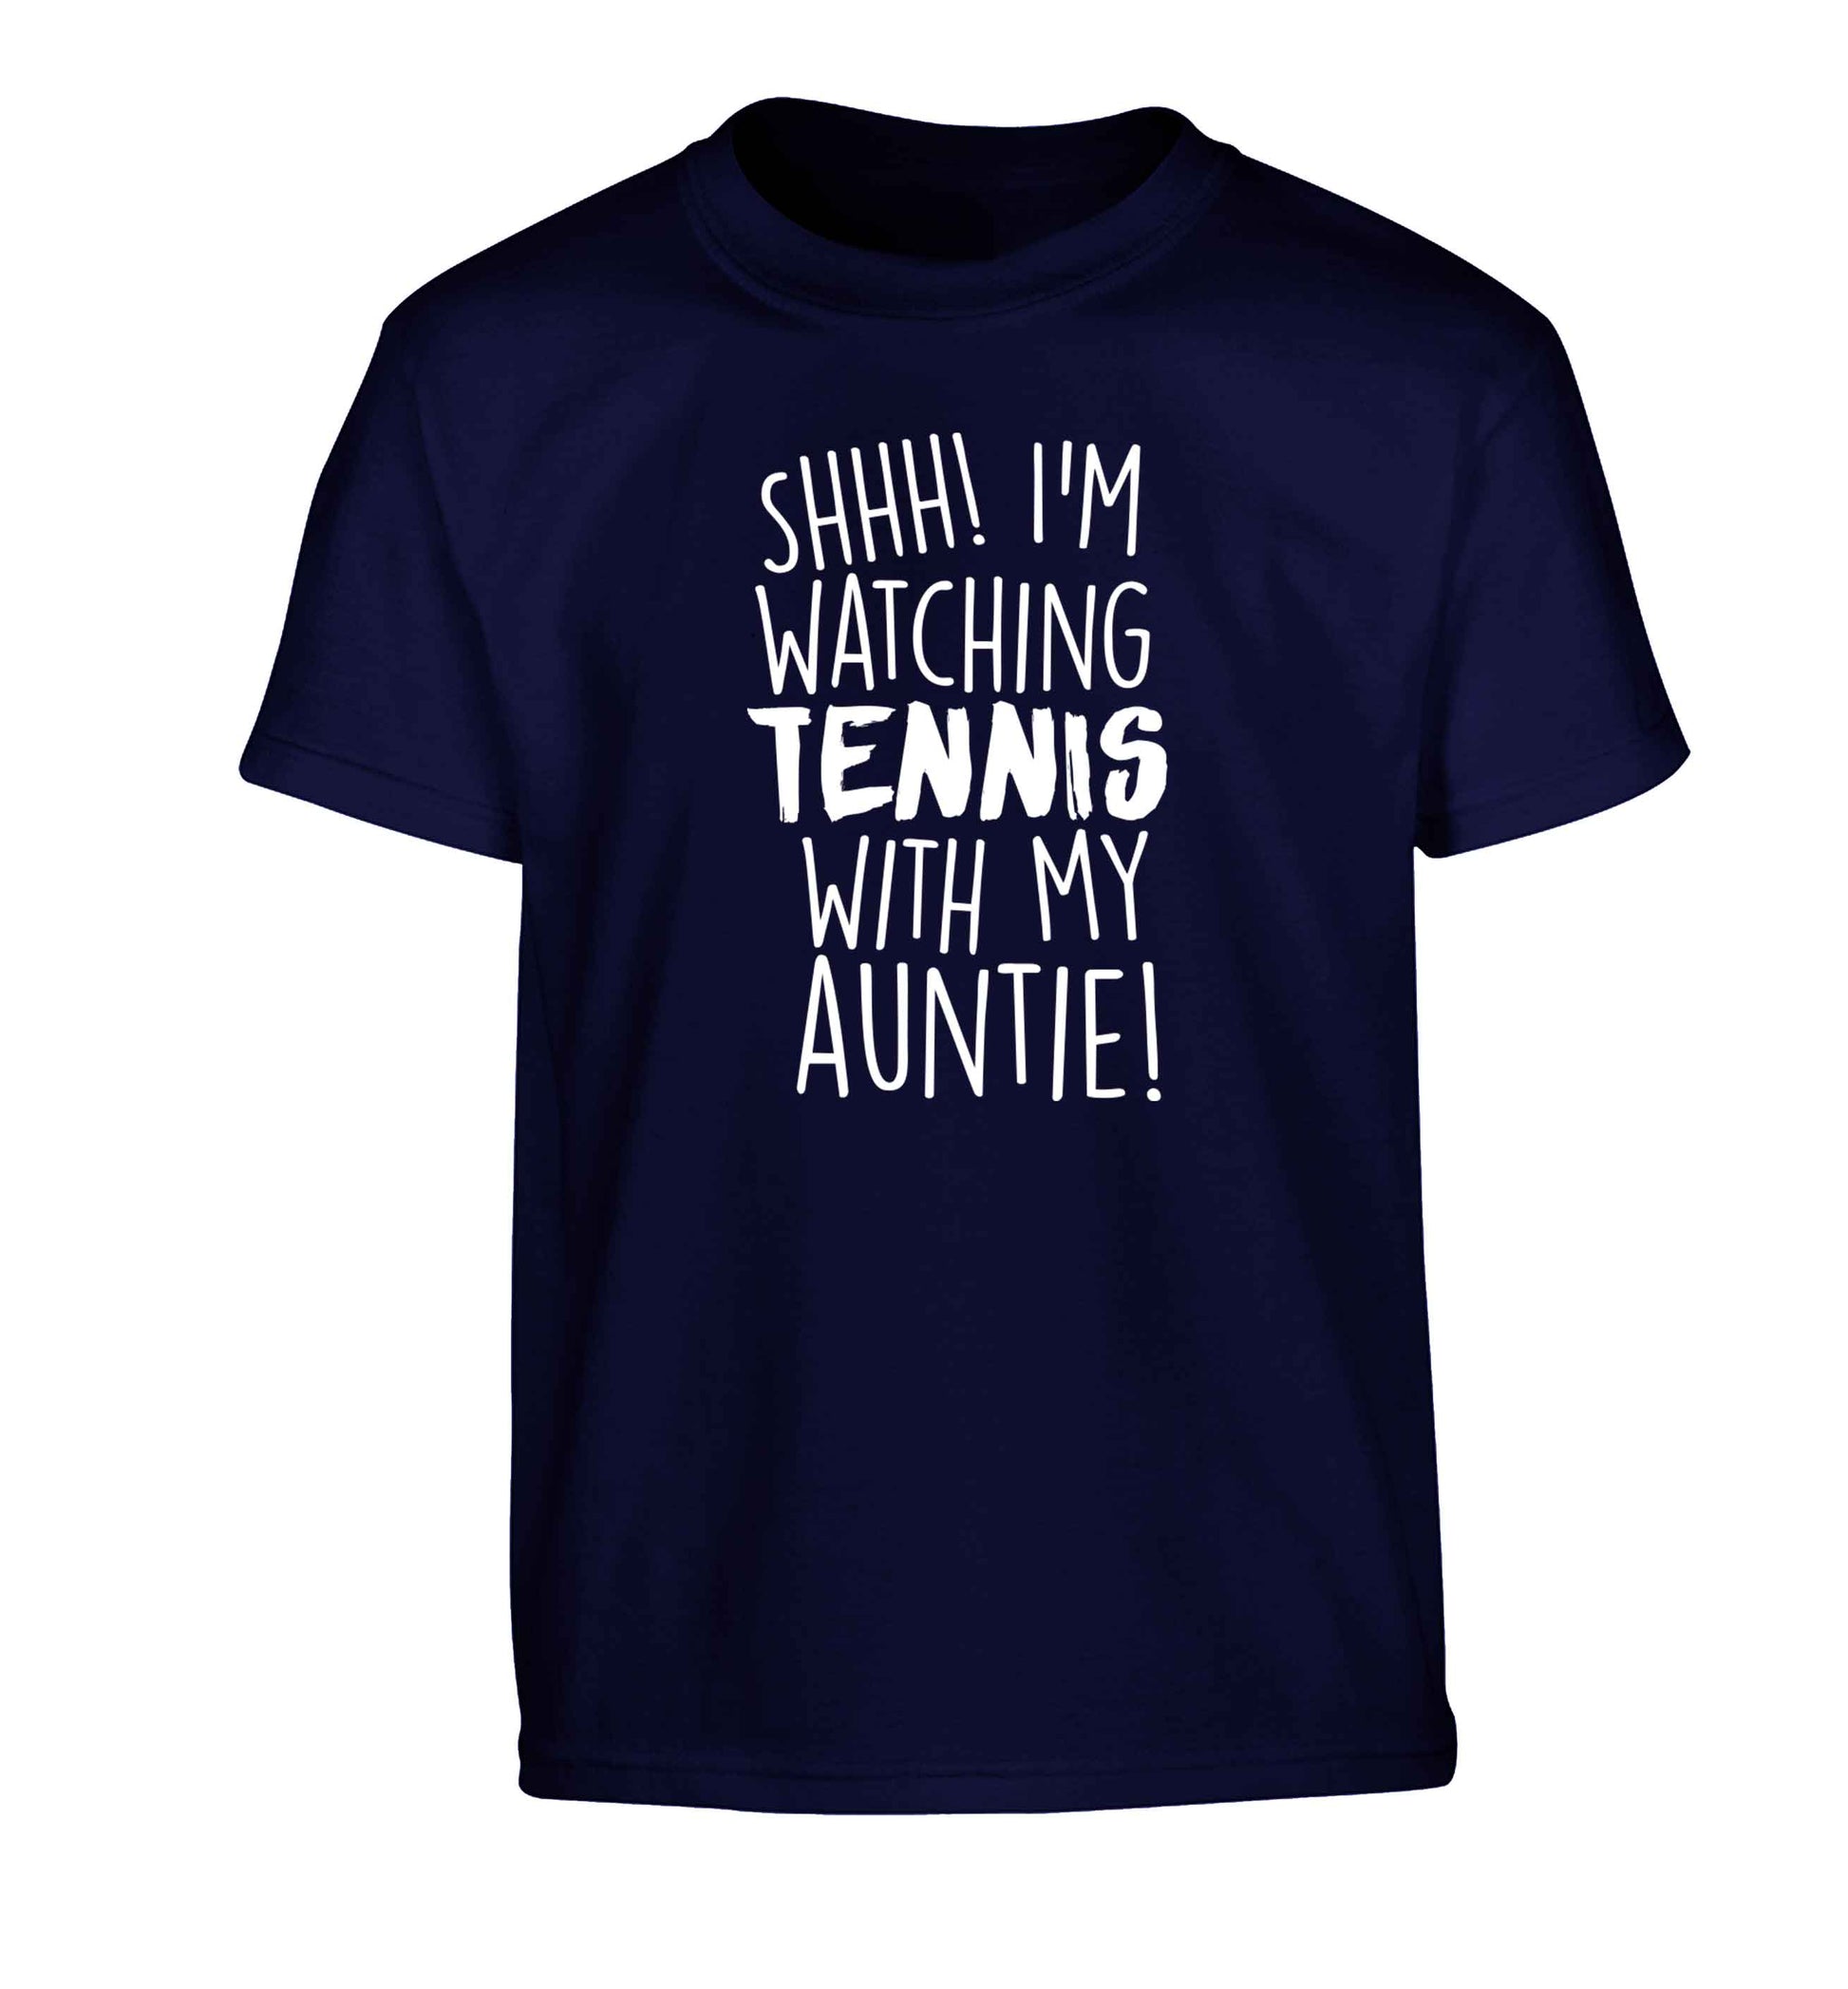 Shh! I'm watching tennis with my auntie! Children's navy Tshirt 12-13 Years